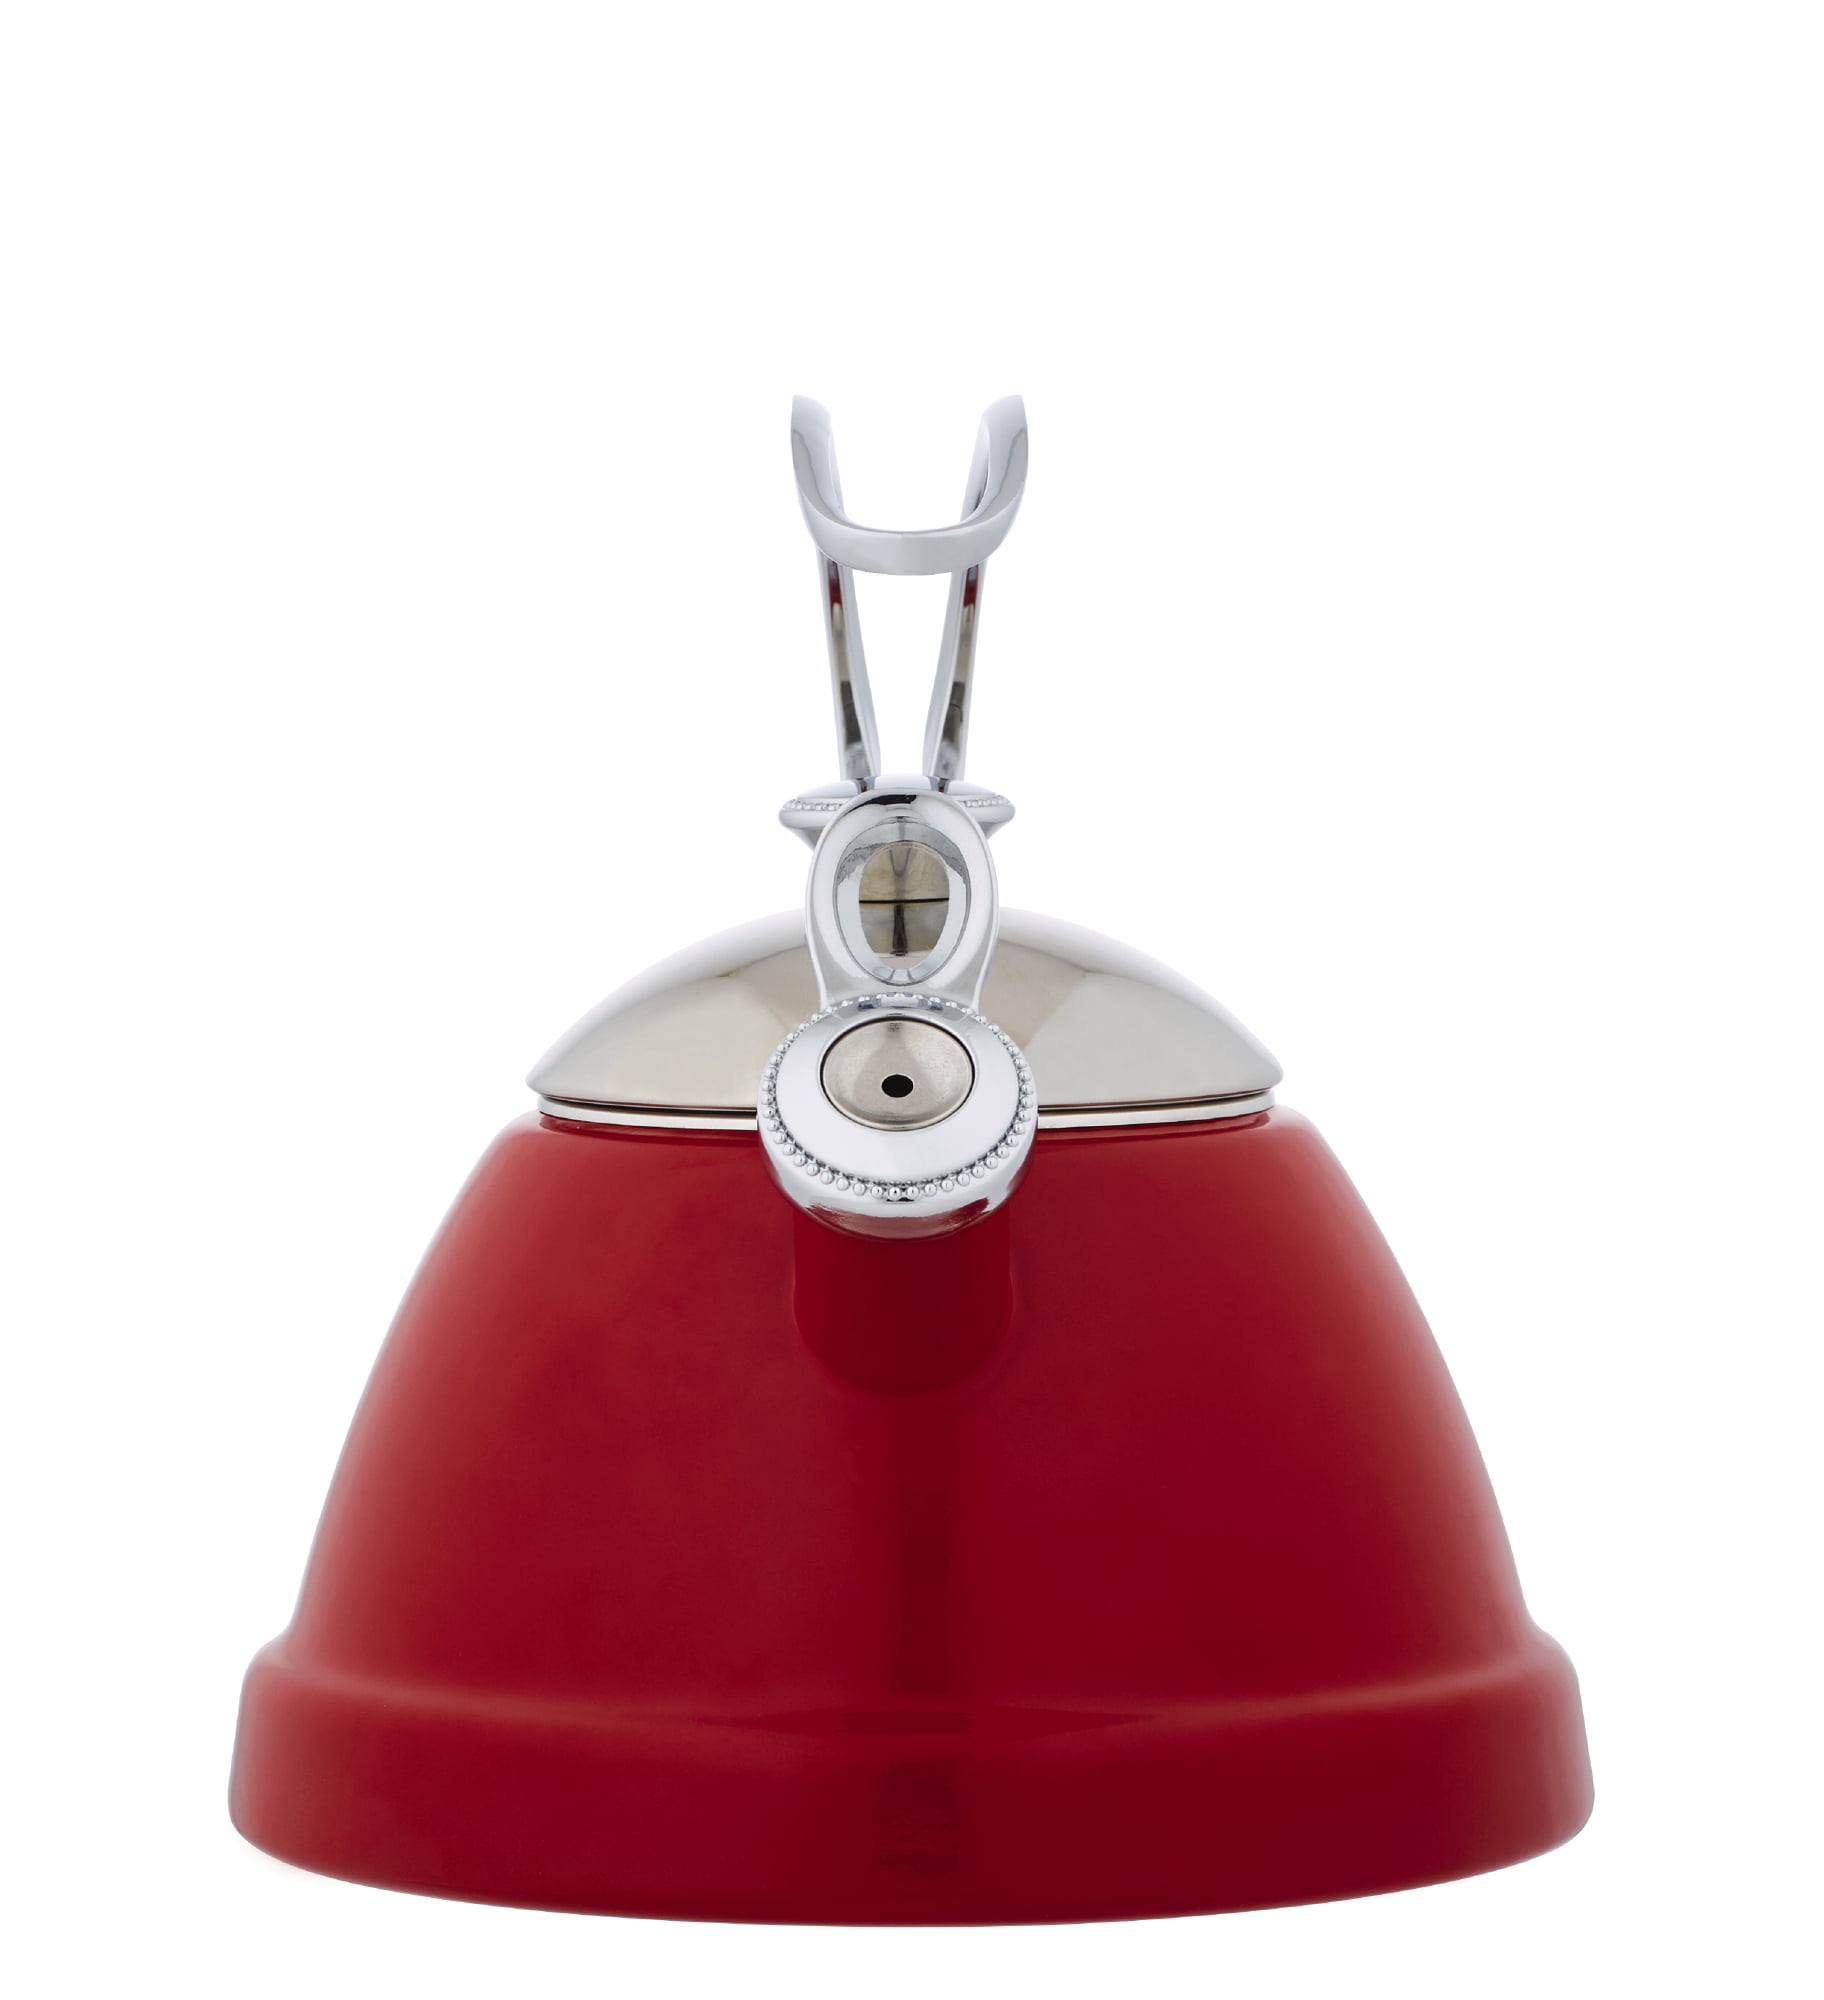  Copco 5236583 Whistling Enamel-on-Steel Tea Kettle, 2.4-Quart,  Charcoal Grey: Home & Kitchen